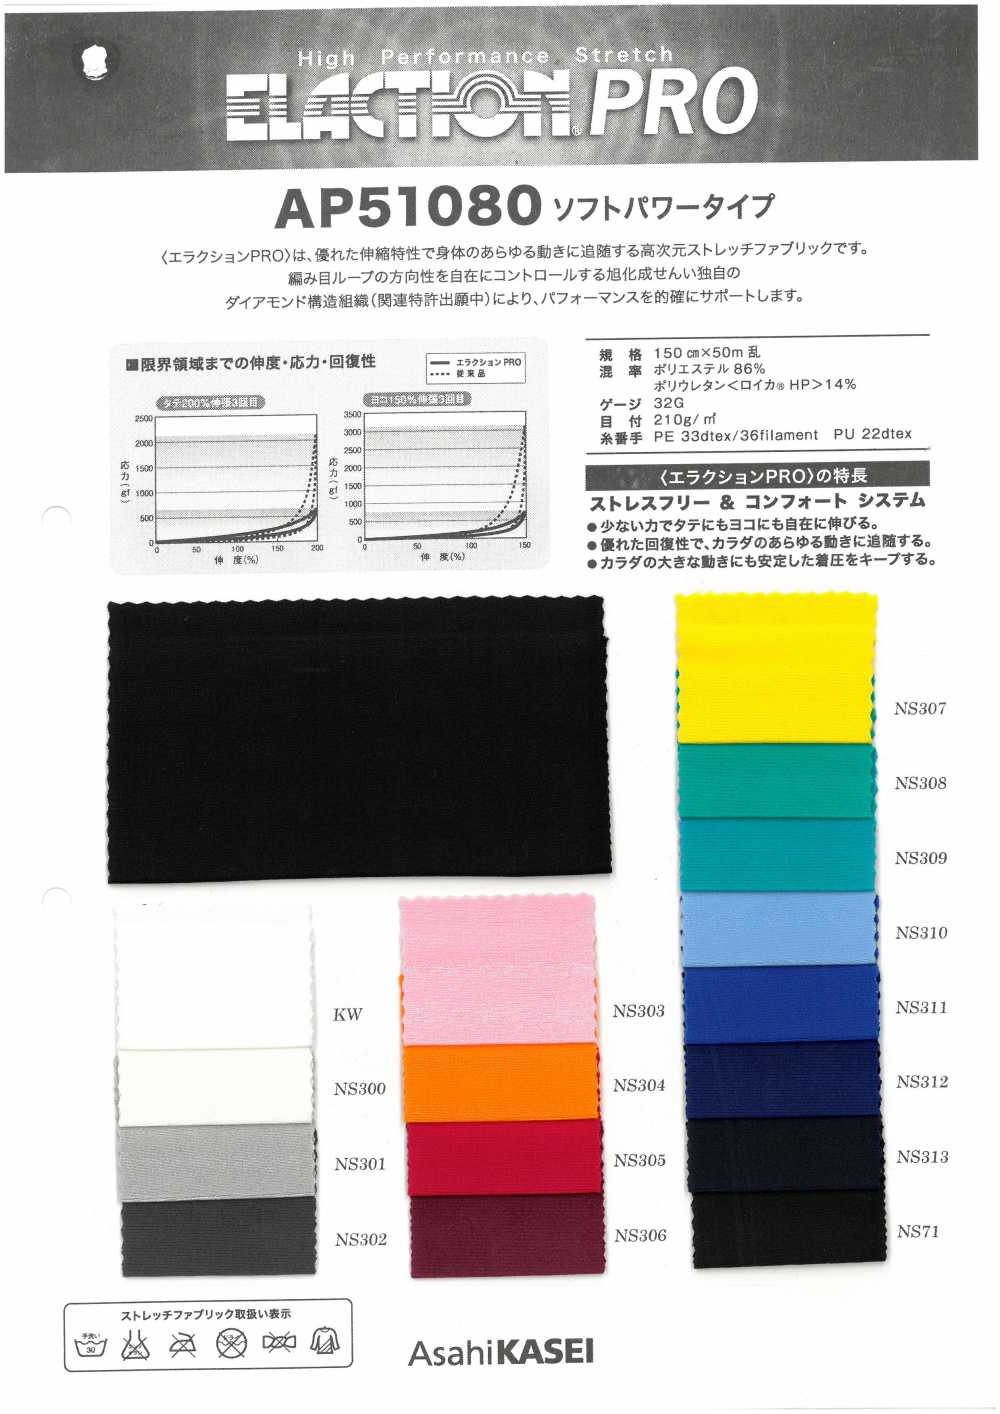 AP51080 Eraction Pro Soft Power Type[Textile / Fabric] Japan Stretch